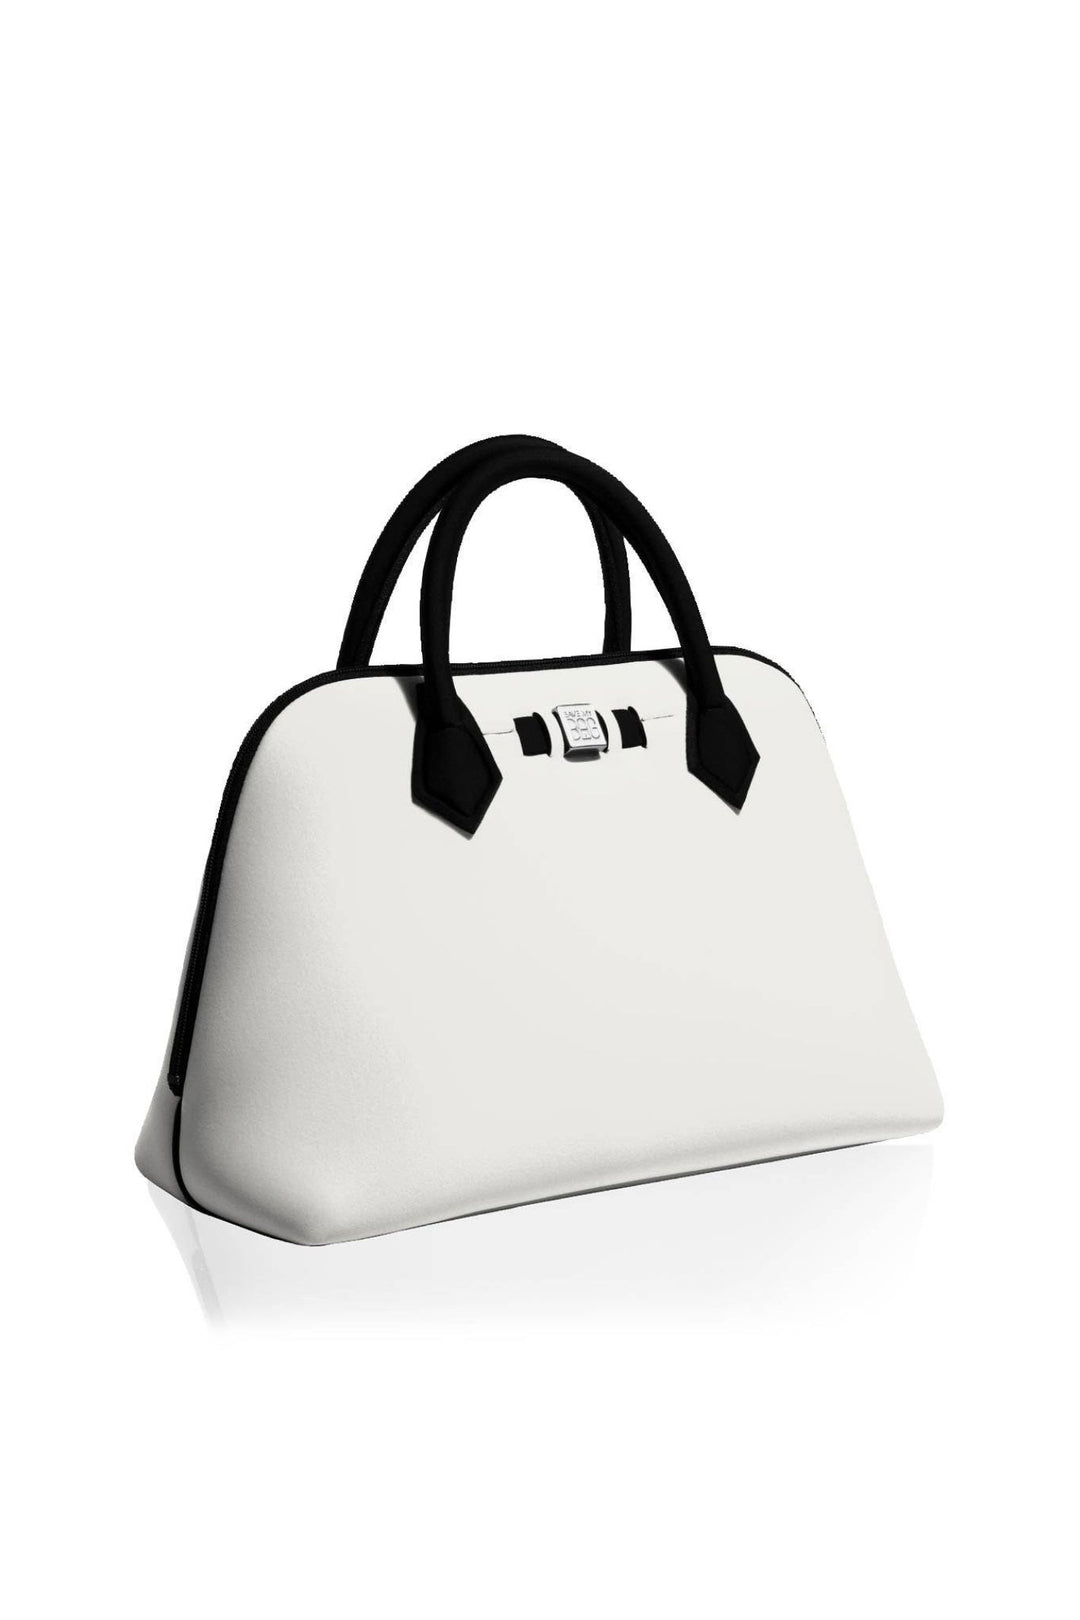 Save My Bag White Washable Eco Neoprene Handbag